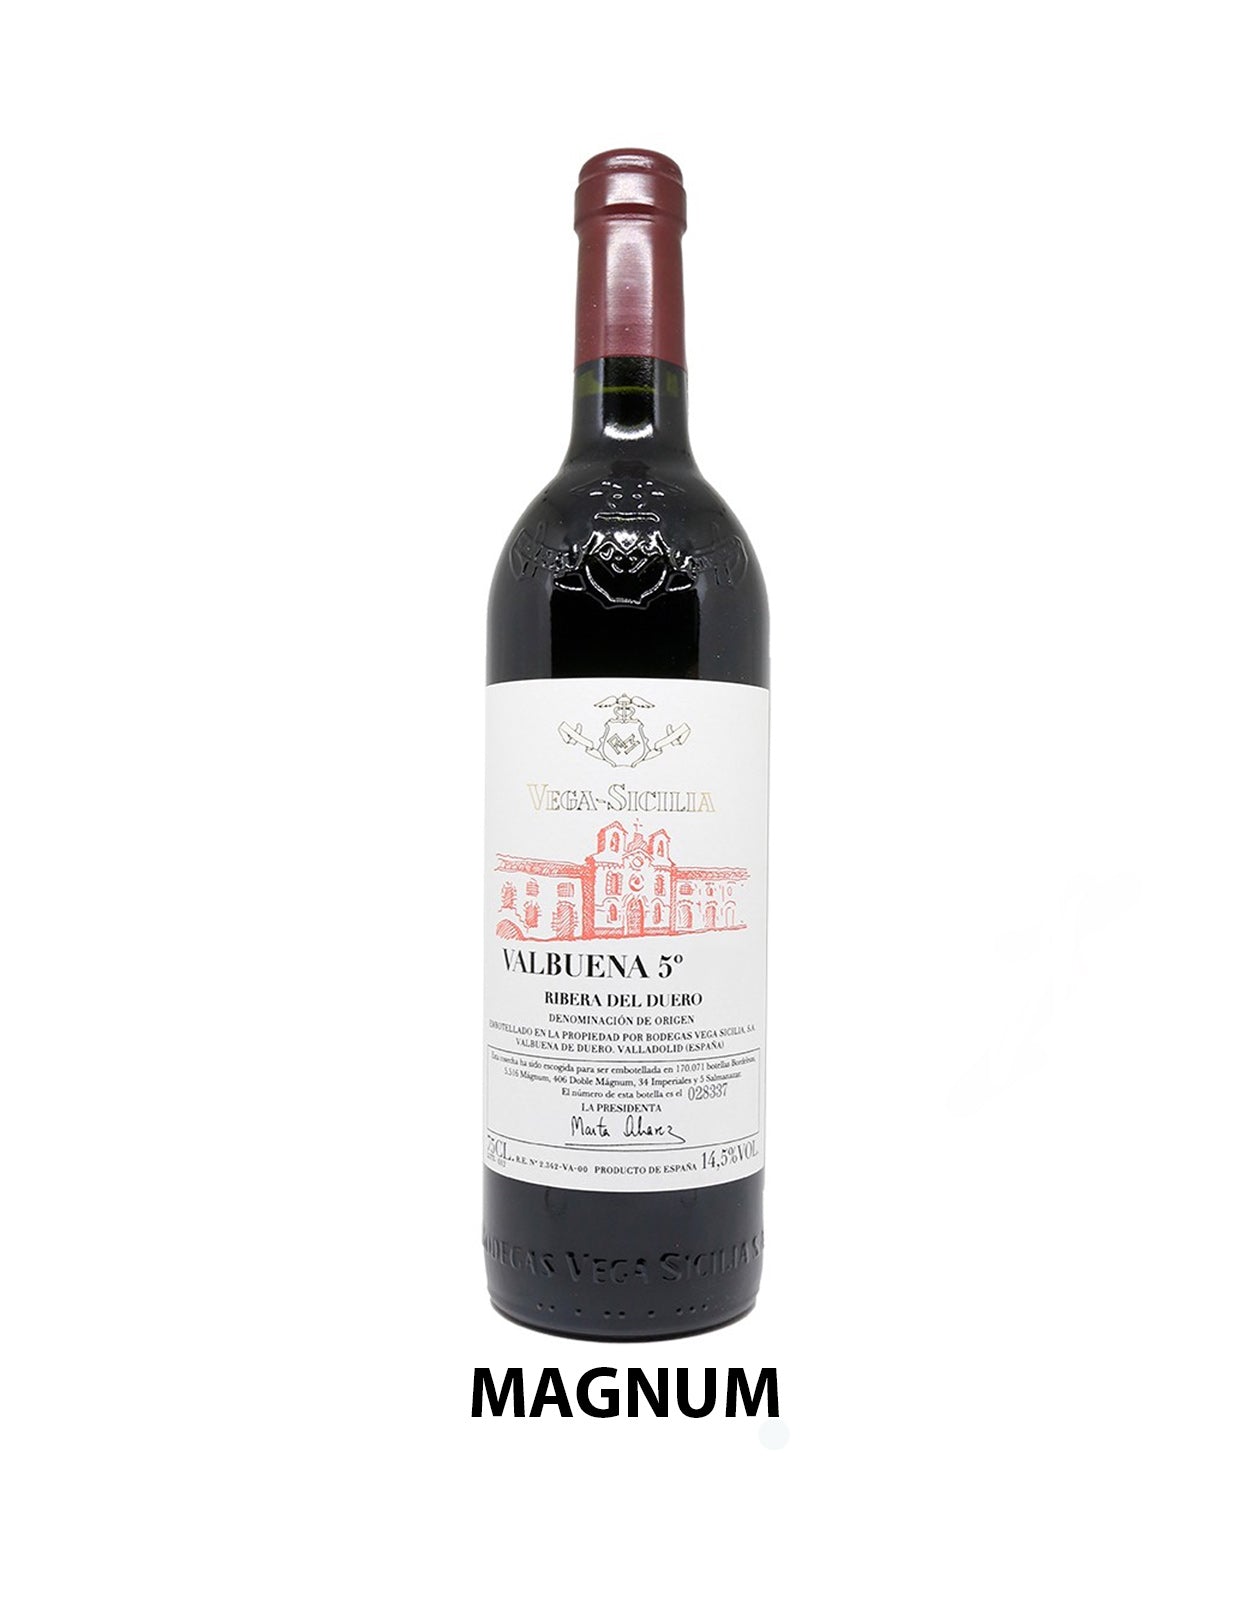 Vega Sicilia Valbuena No 5 2018 - 1.5 Litre Bottle